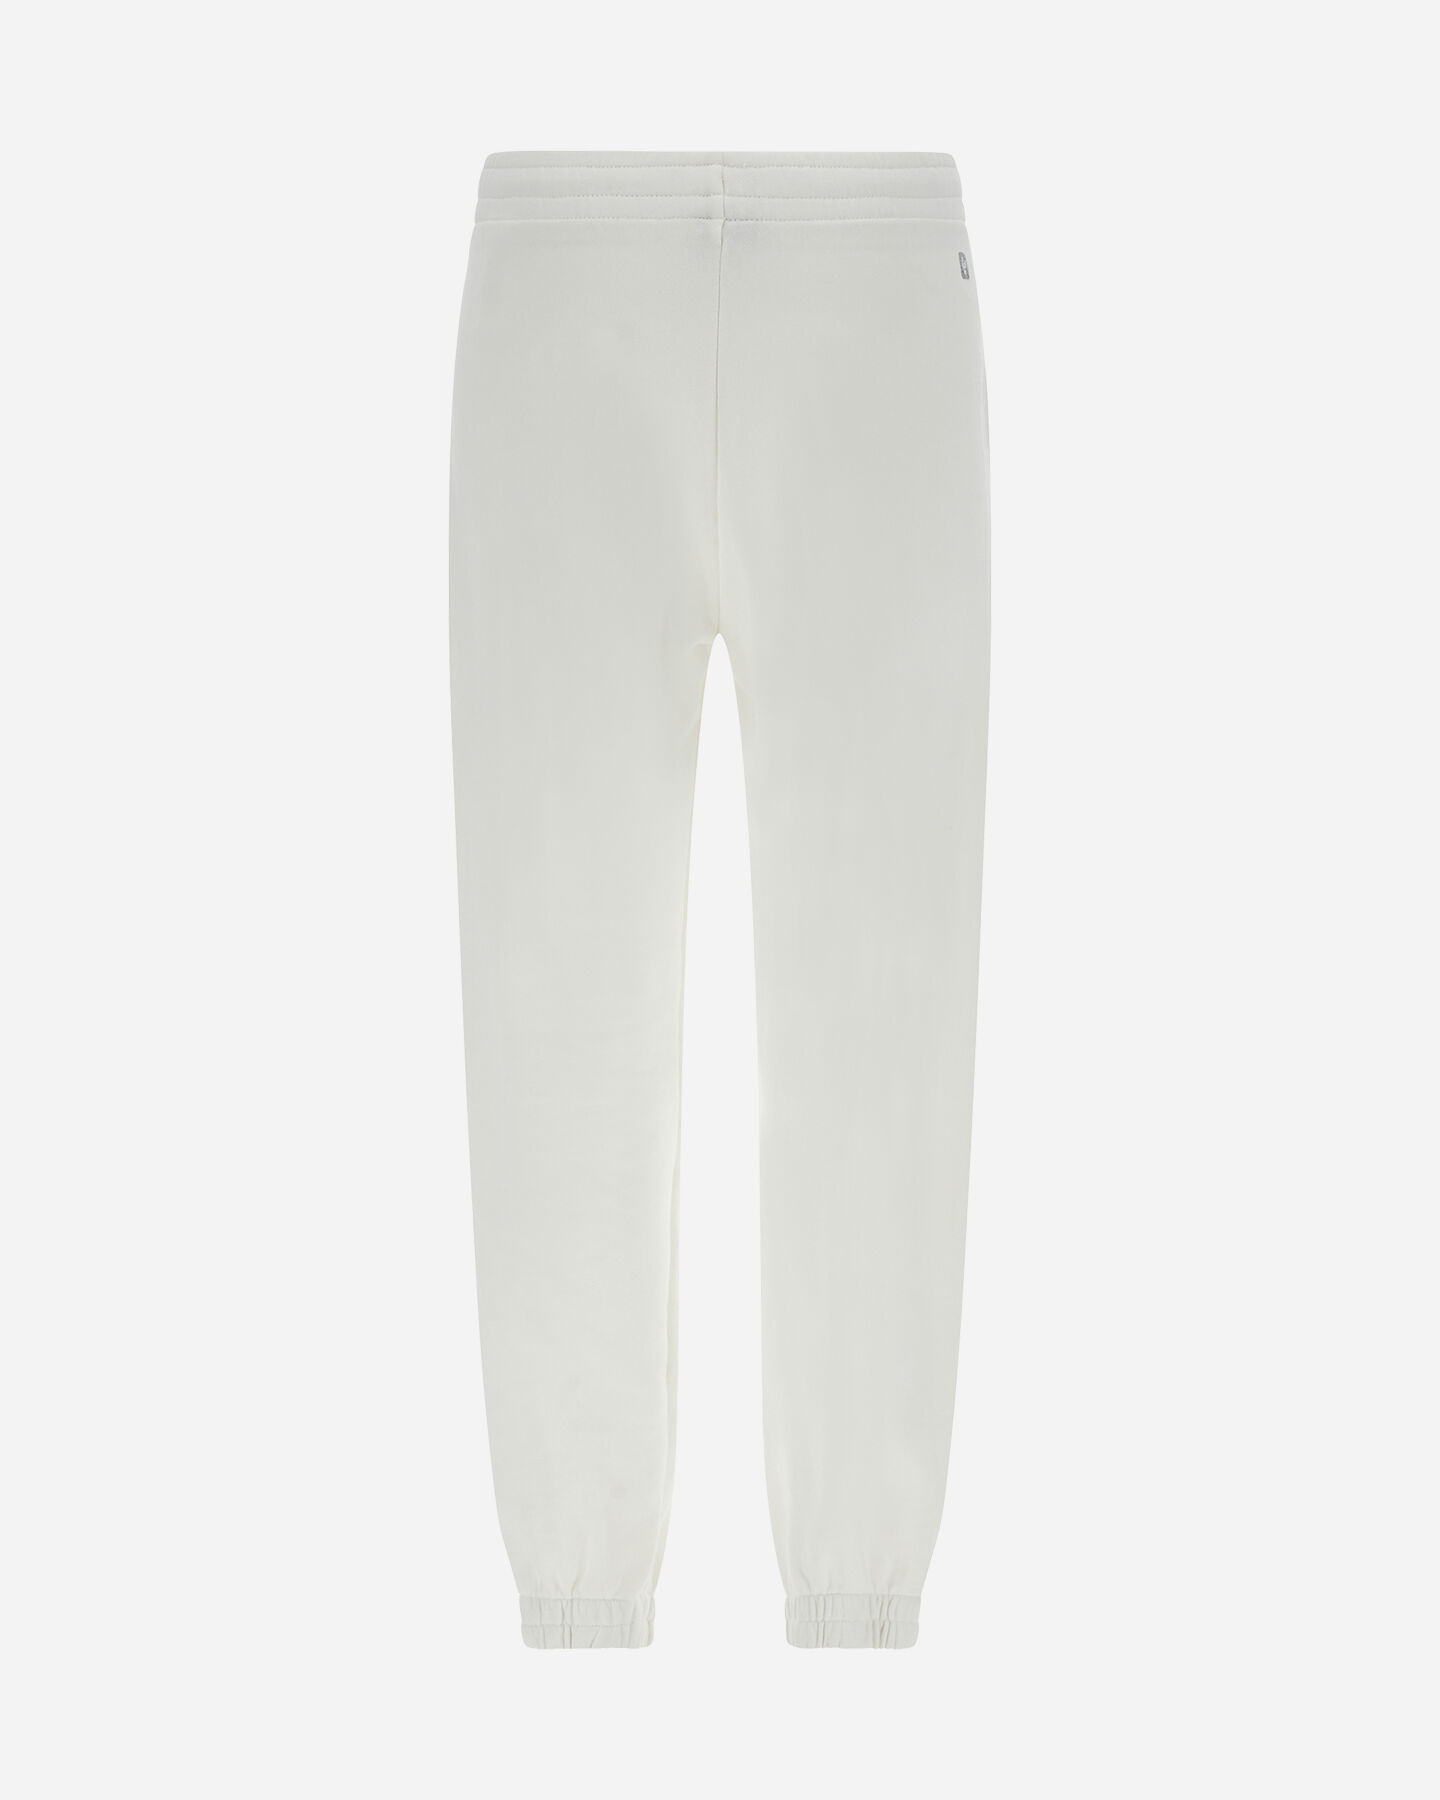  Pantalone FREDDY SMALL LOGO W S5551172|W72X-|S scatto 1